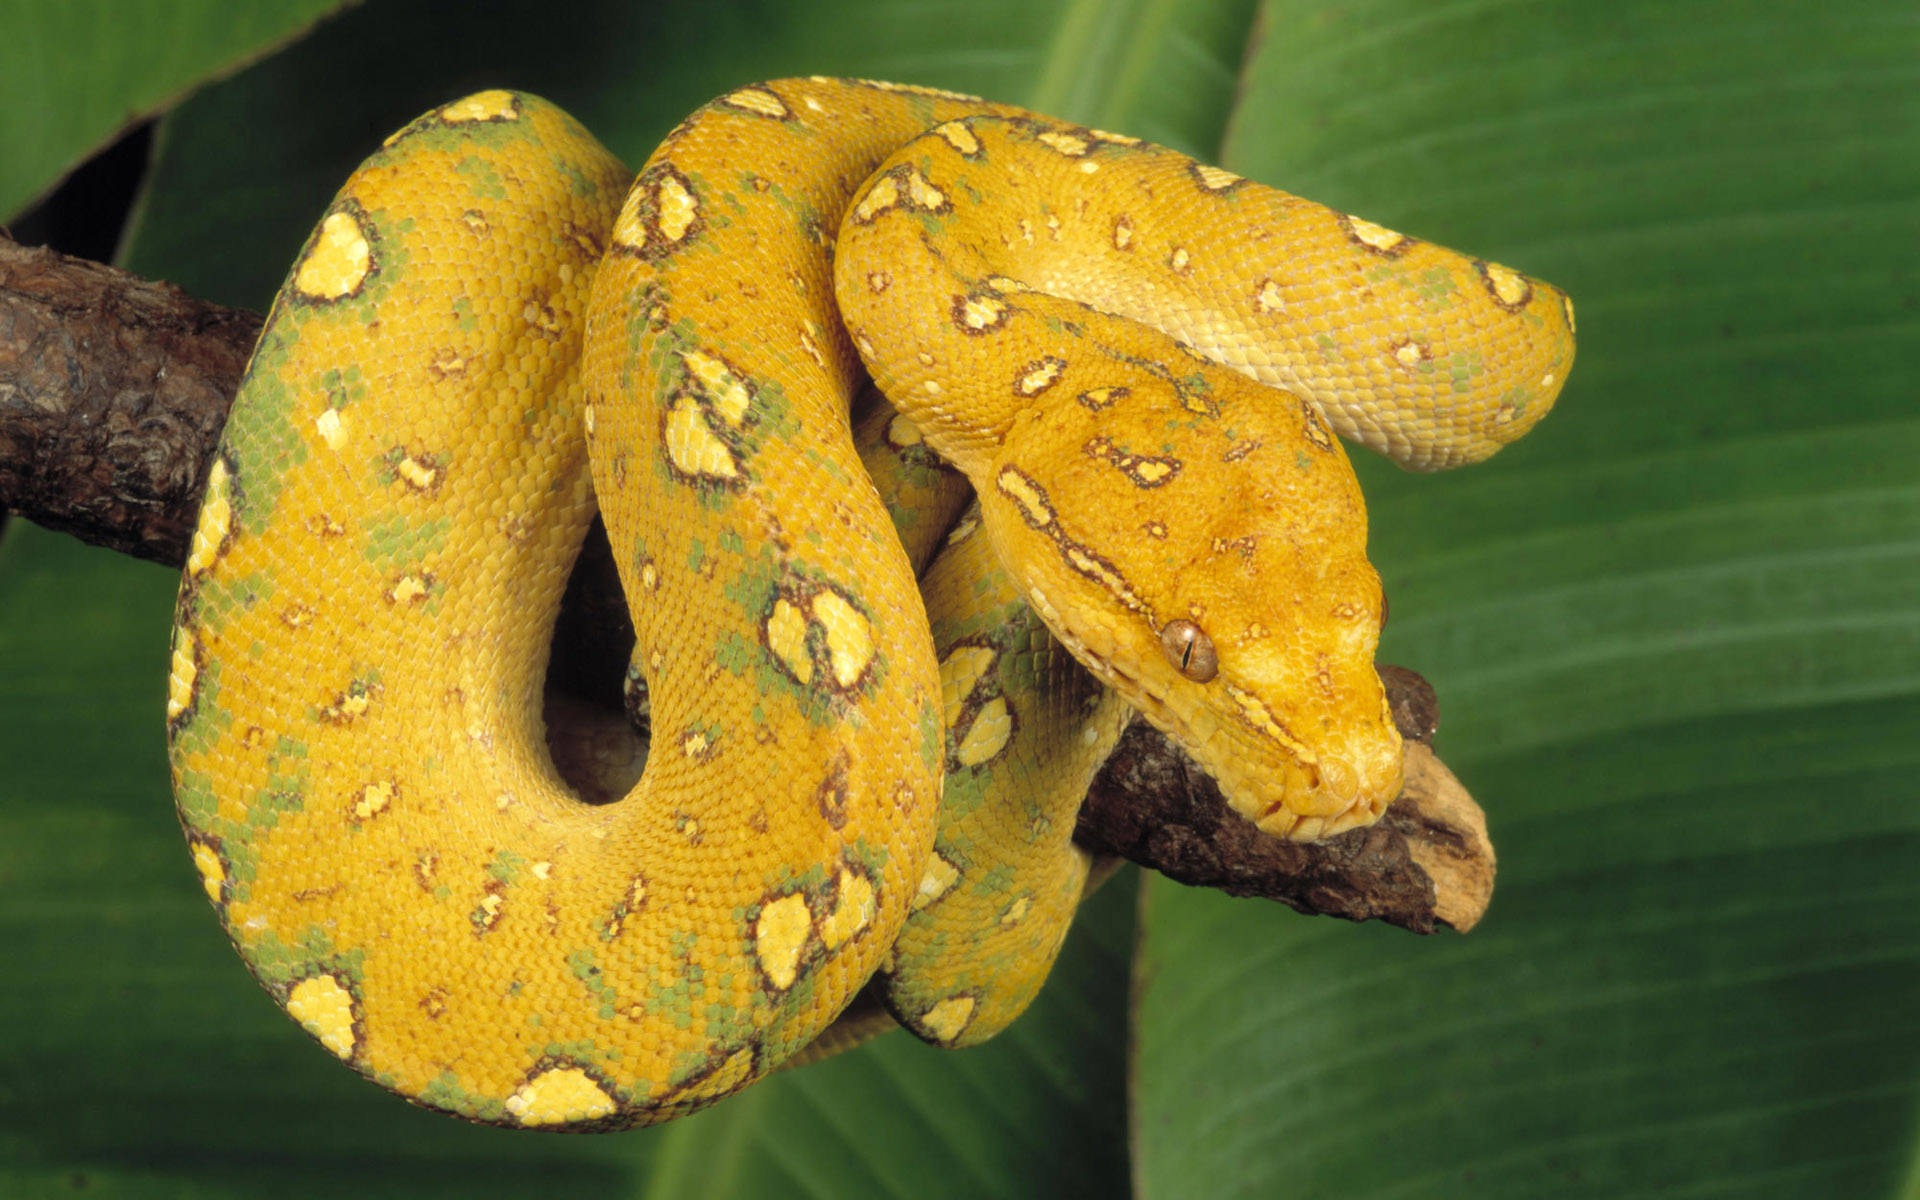 Animals Reptiles Yellow Snake 016435  